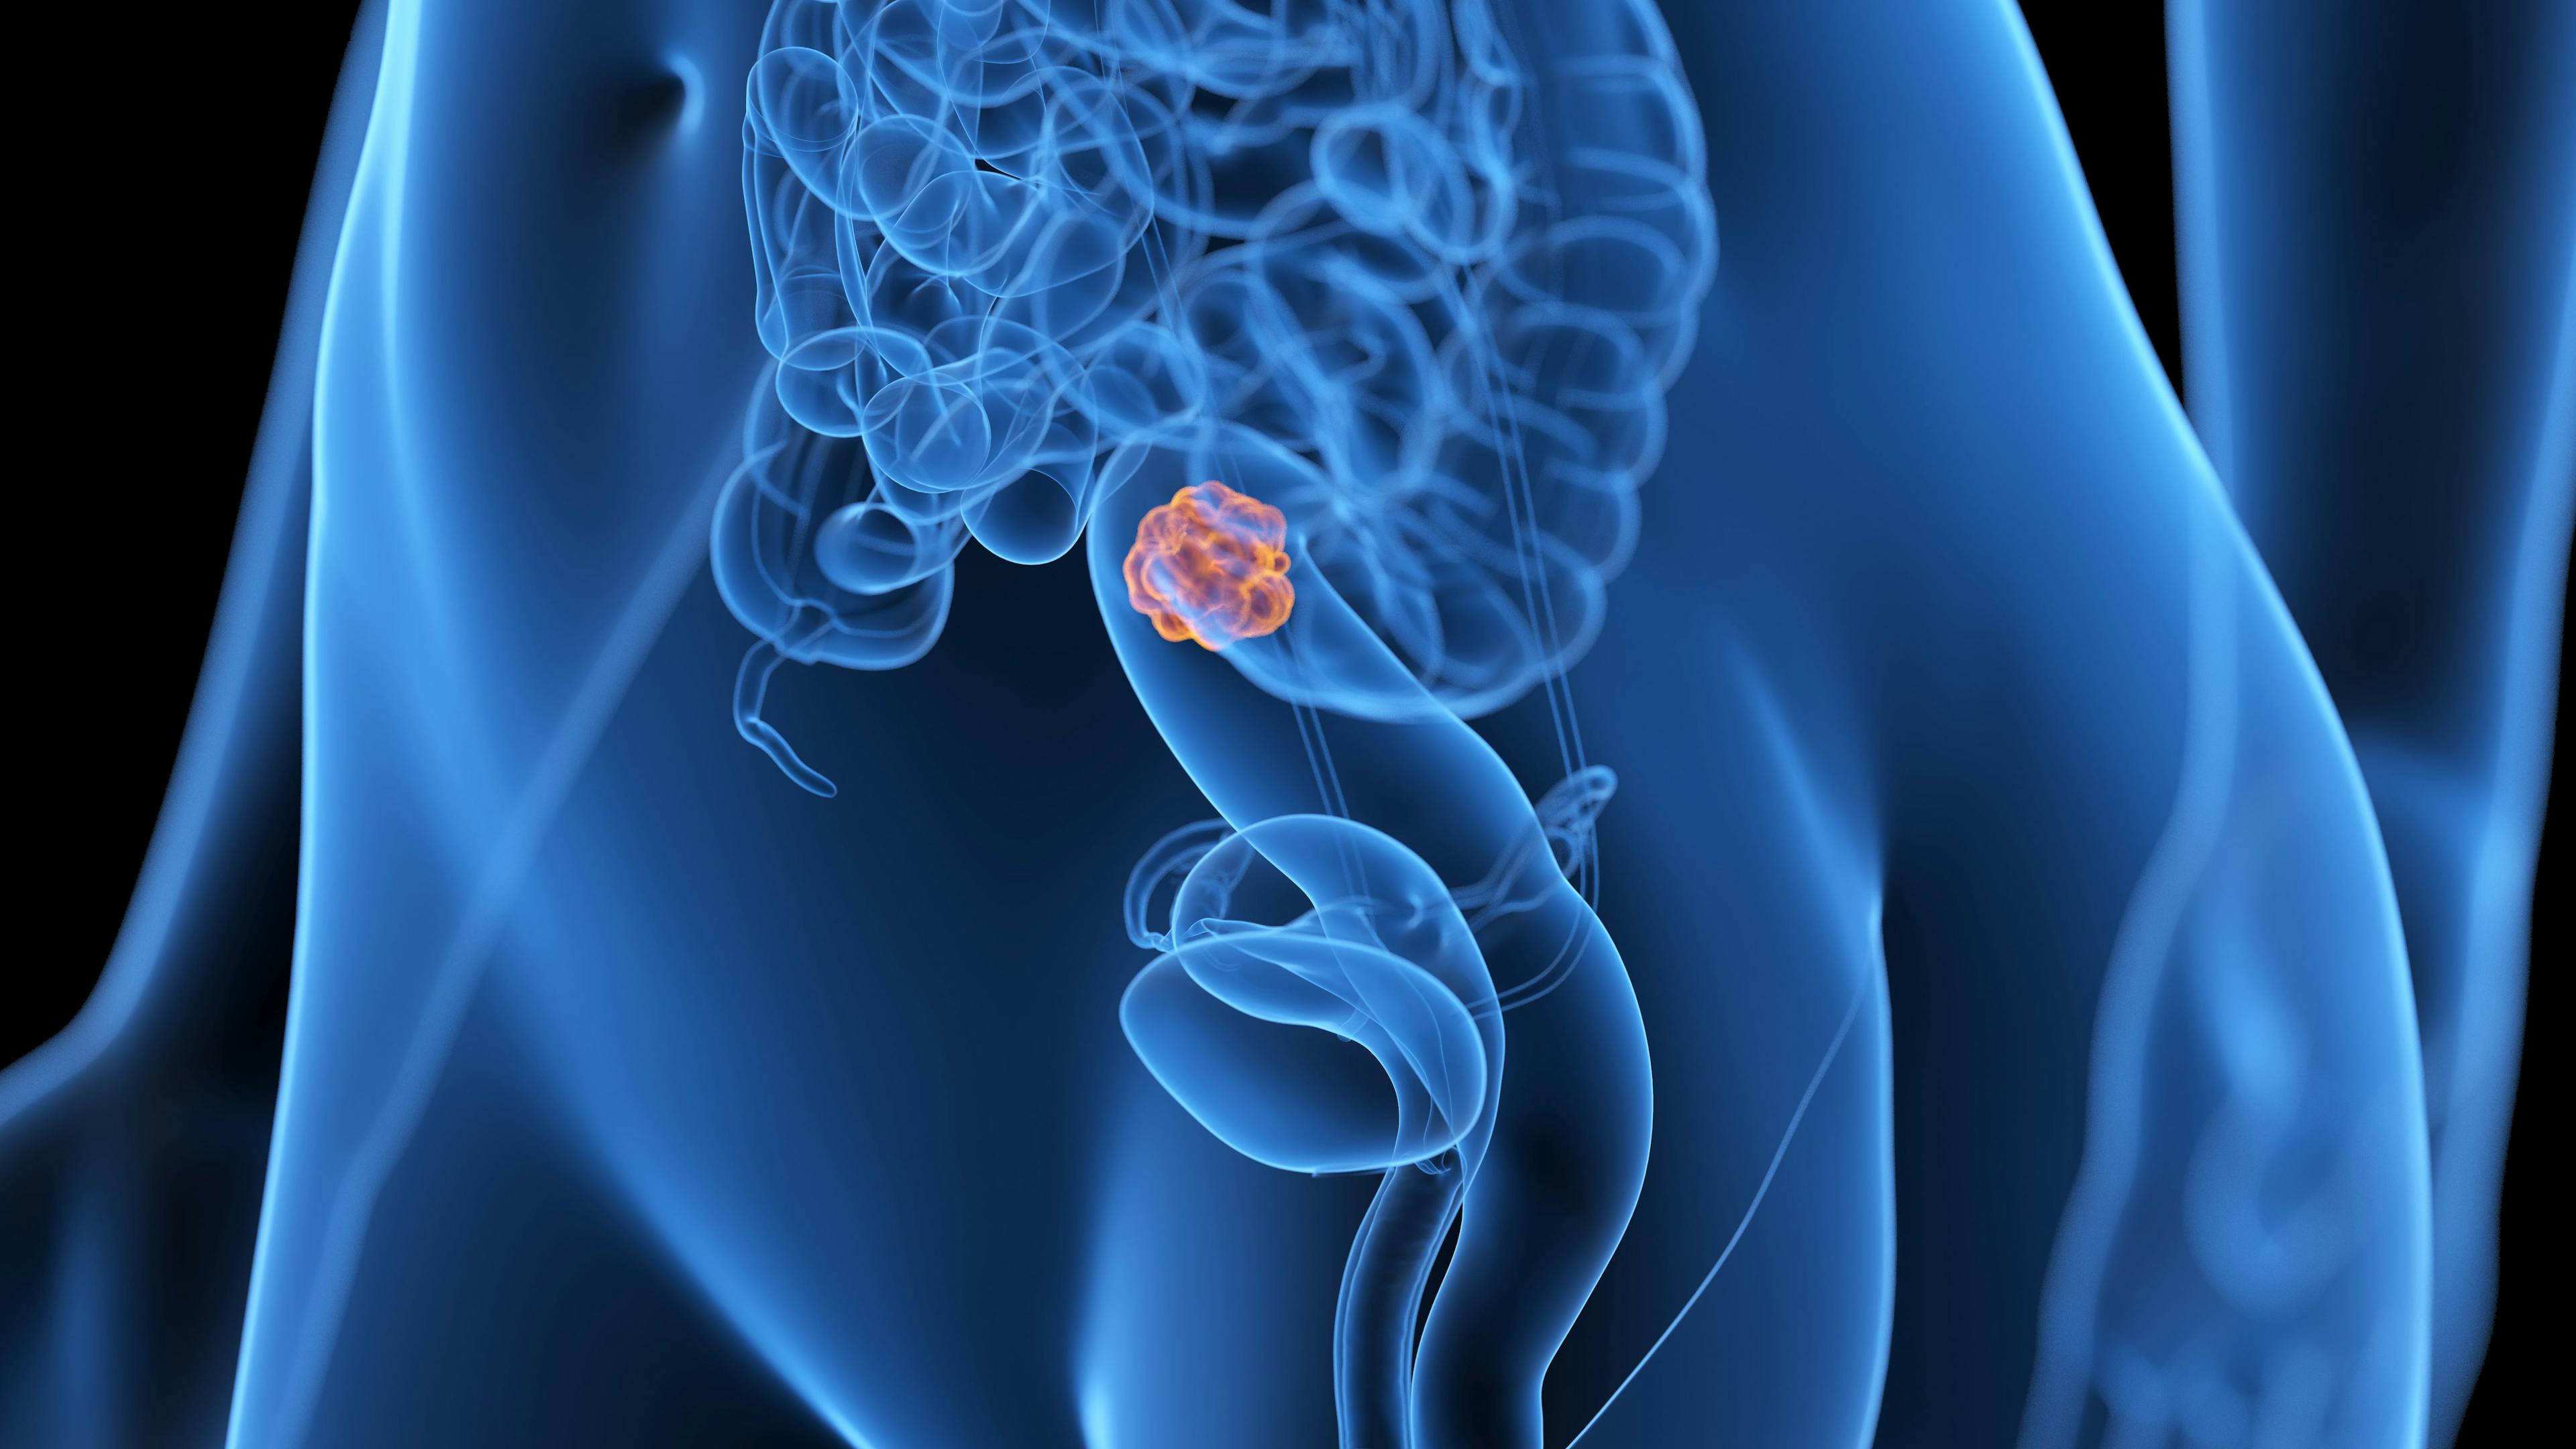 Colorectal cancer | Image credit: Sebastian Kaulitzki - stock.adobe.com